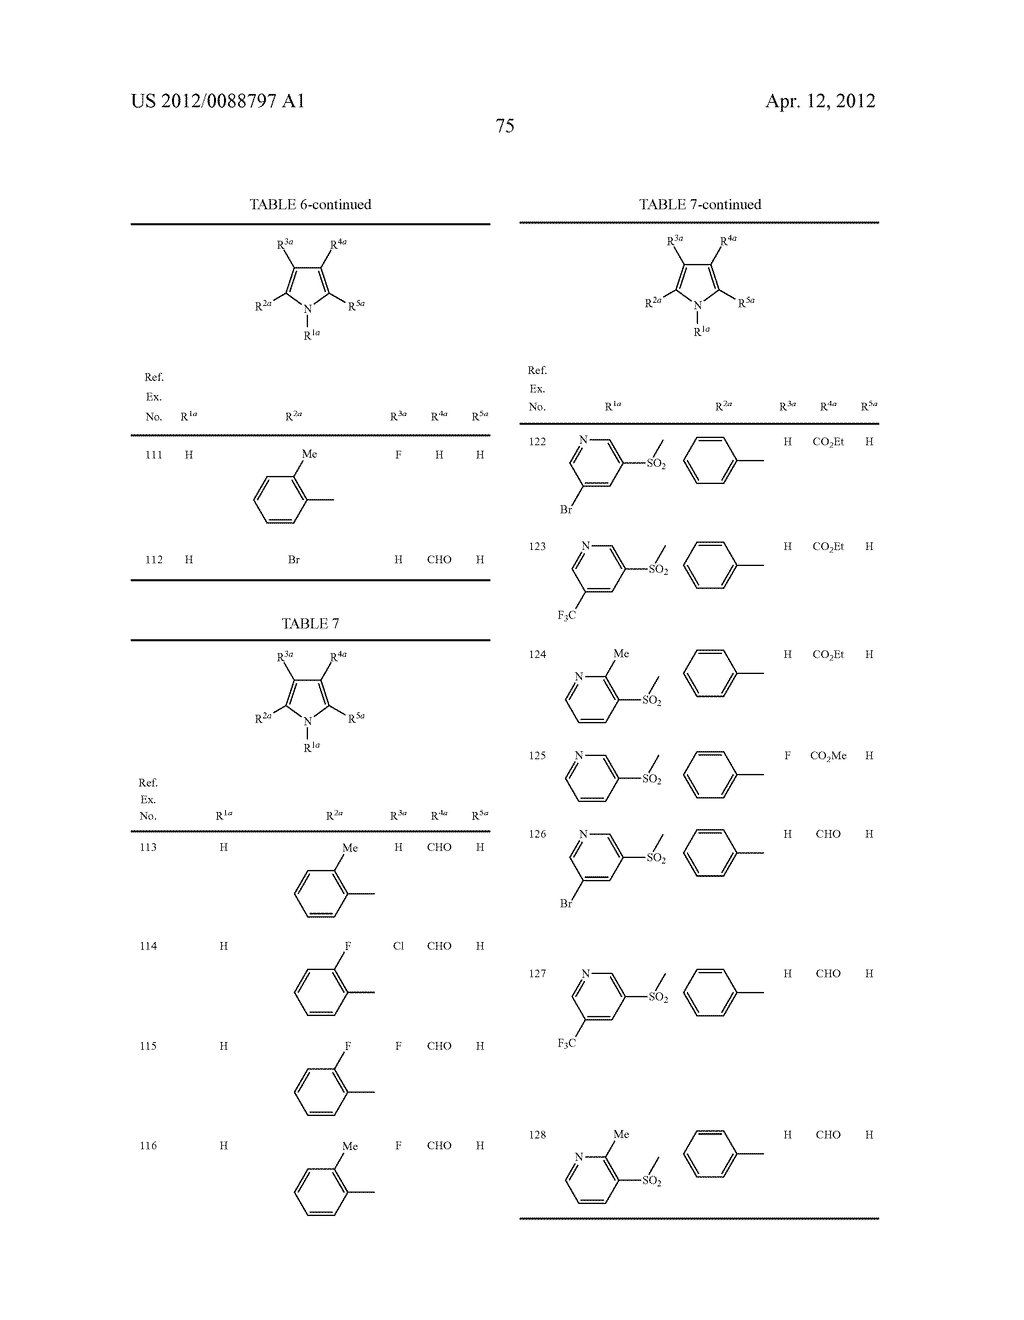 1-HETEROCYCLYLSULFONYL, 3-AMINOMETHYL, 5- (HETERO-) ARYL SUBSTITUTED     1-H-PYRROLE DERIVATIVES AS ACID SECRETION INHIBITORS - diagram, schematic, and image 76